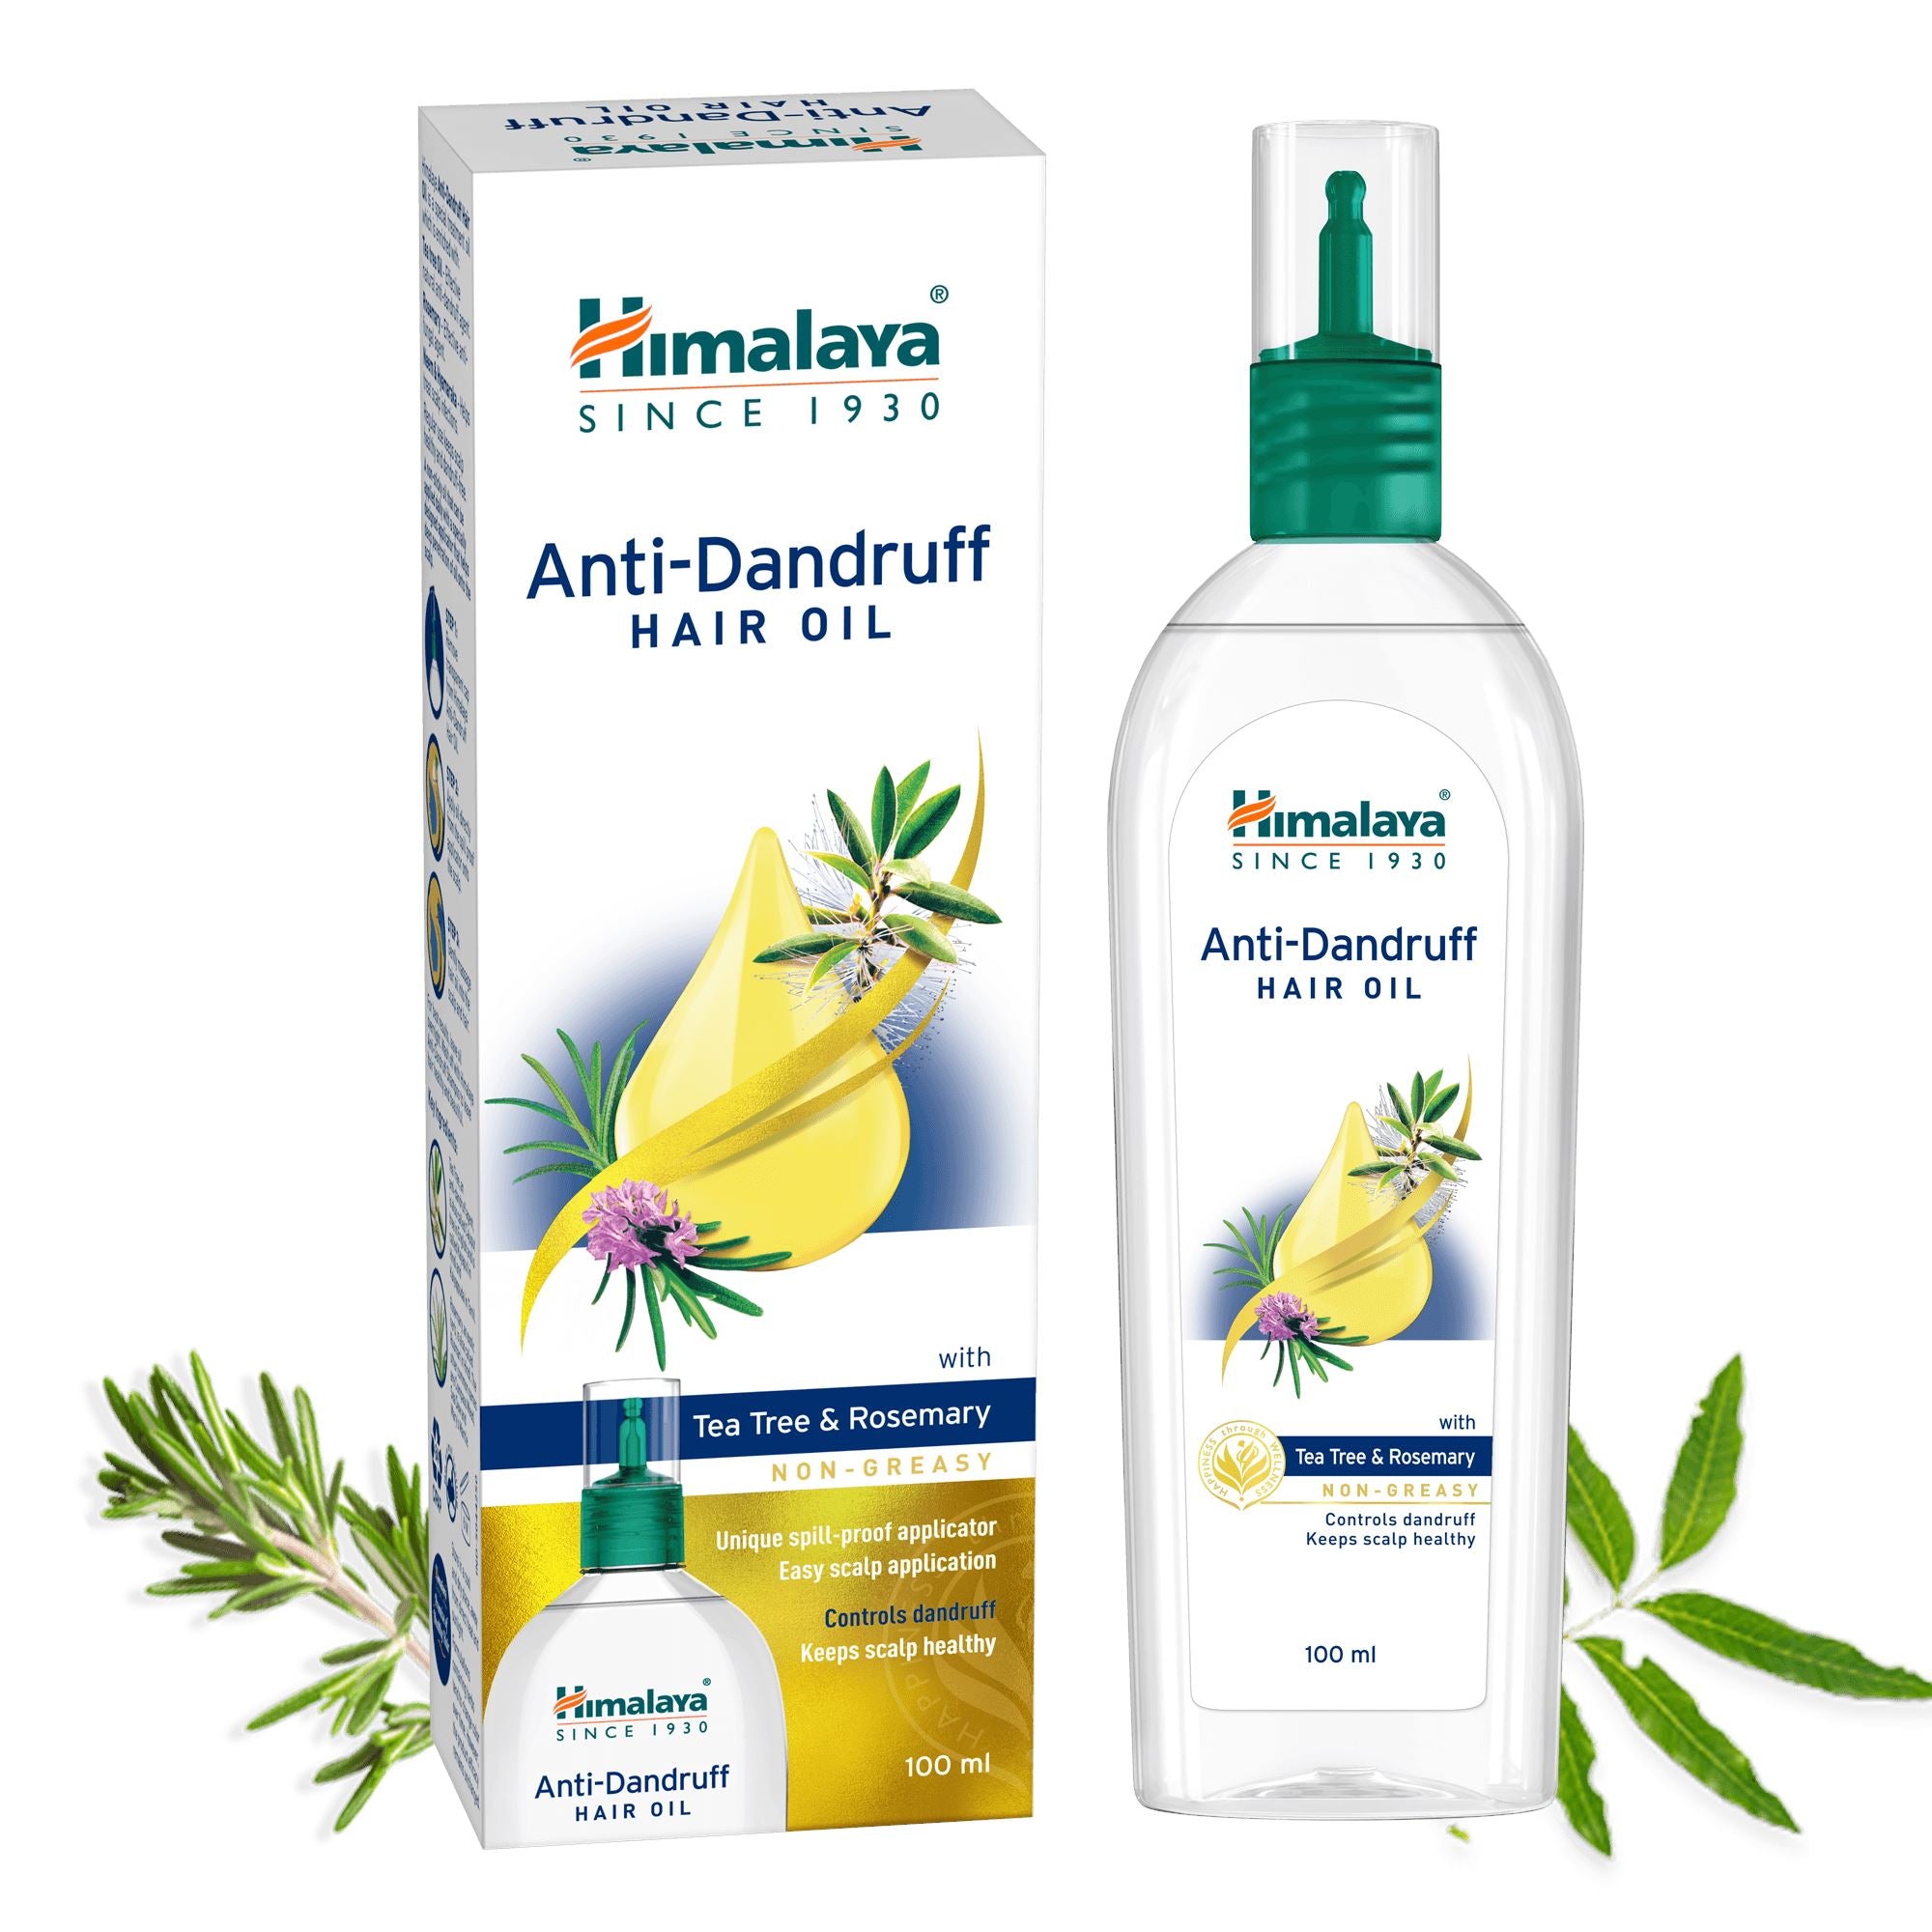 Himalaya Anti-Dandruff Hair Oil - Controls dandruff and revitalizes hair